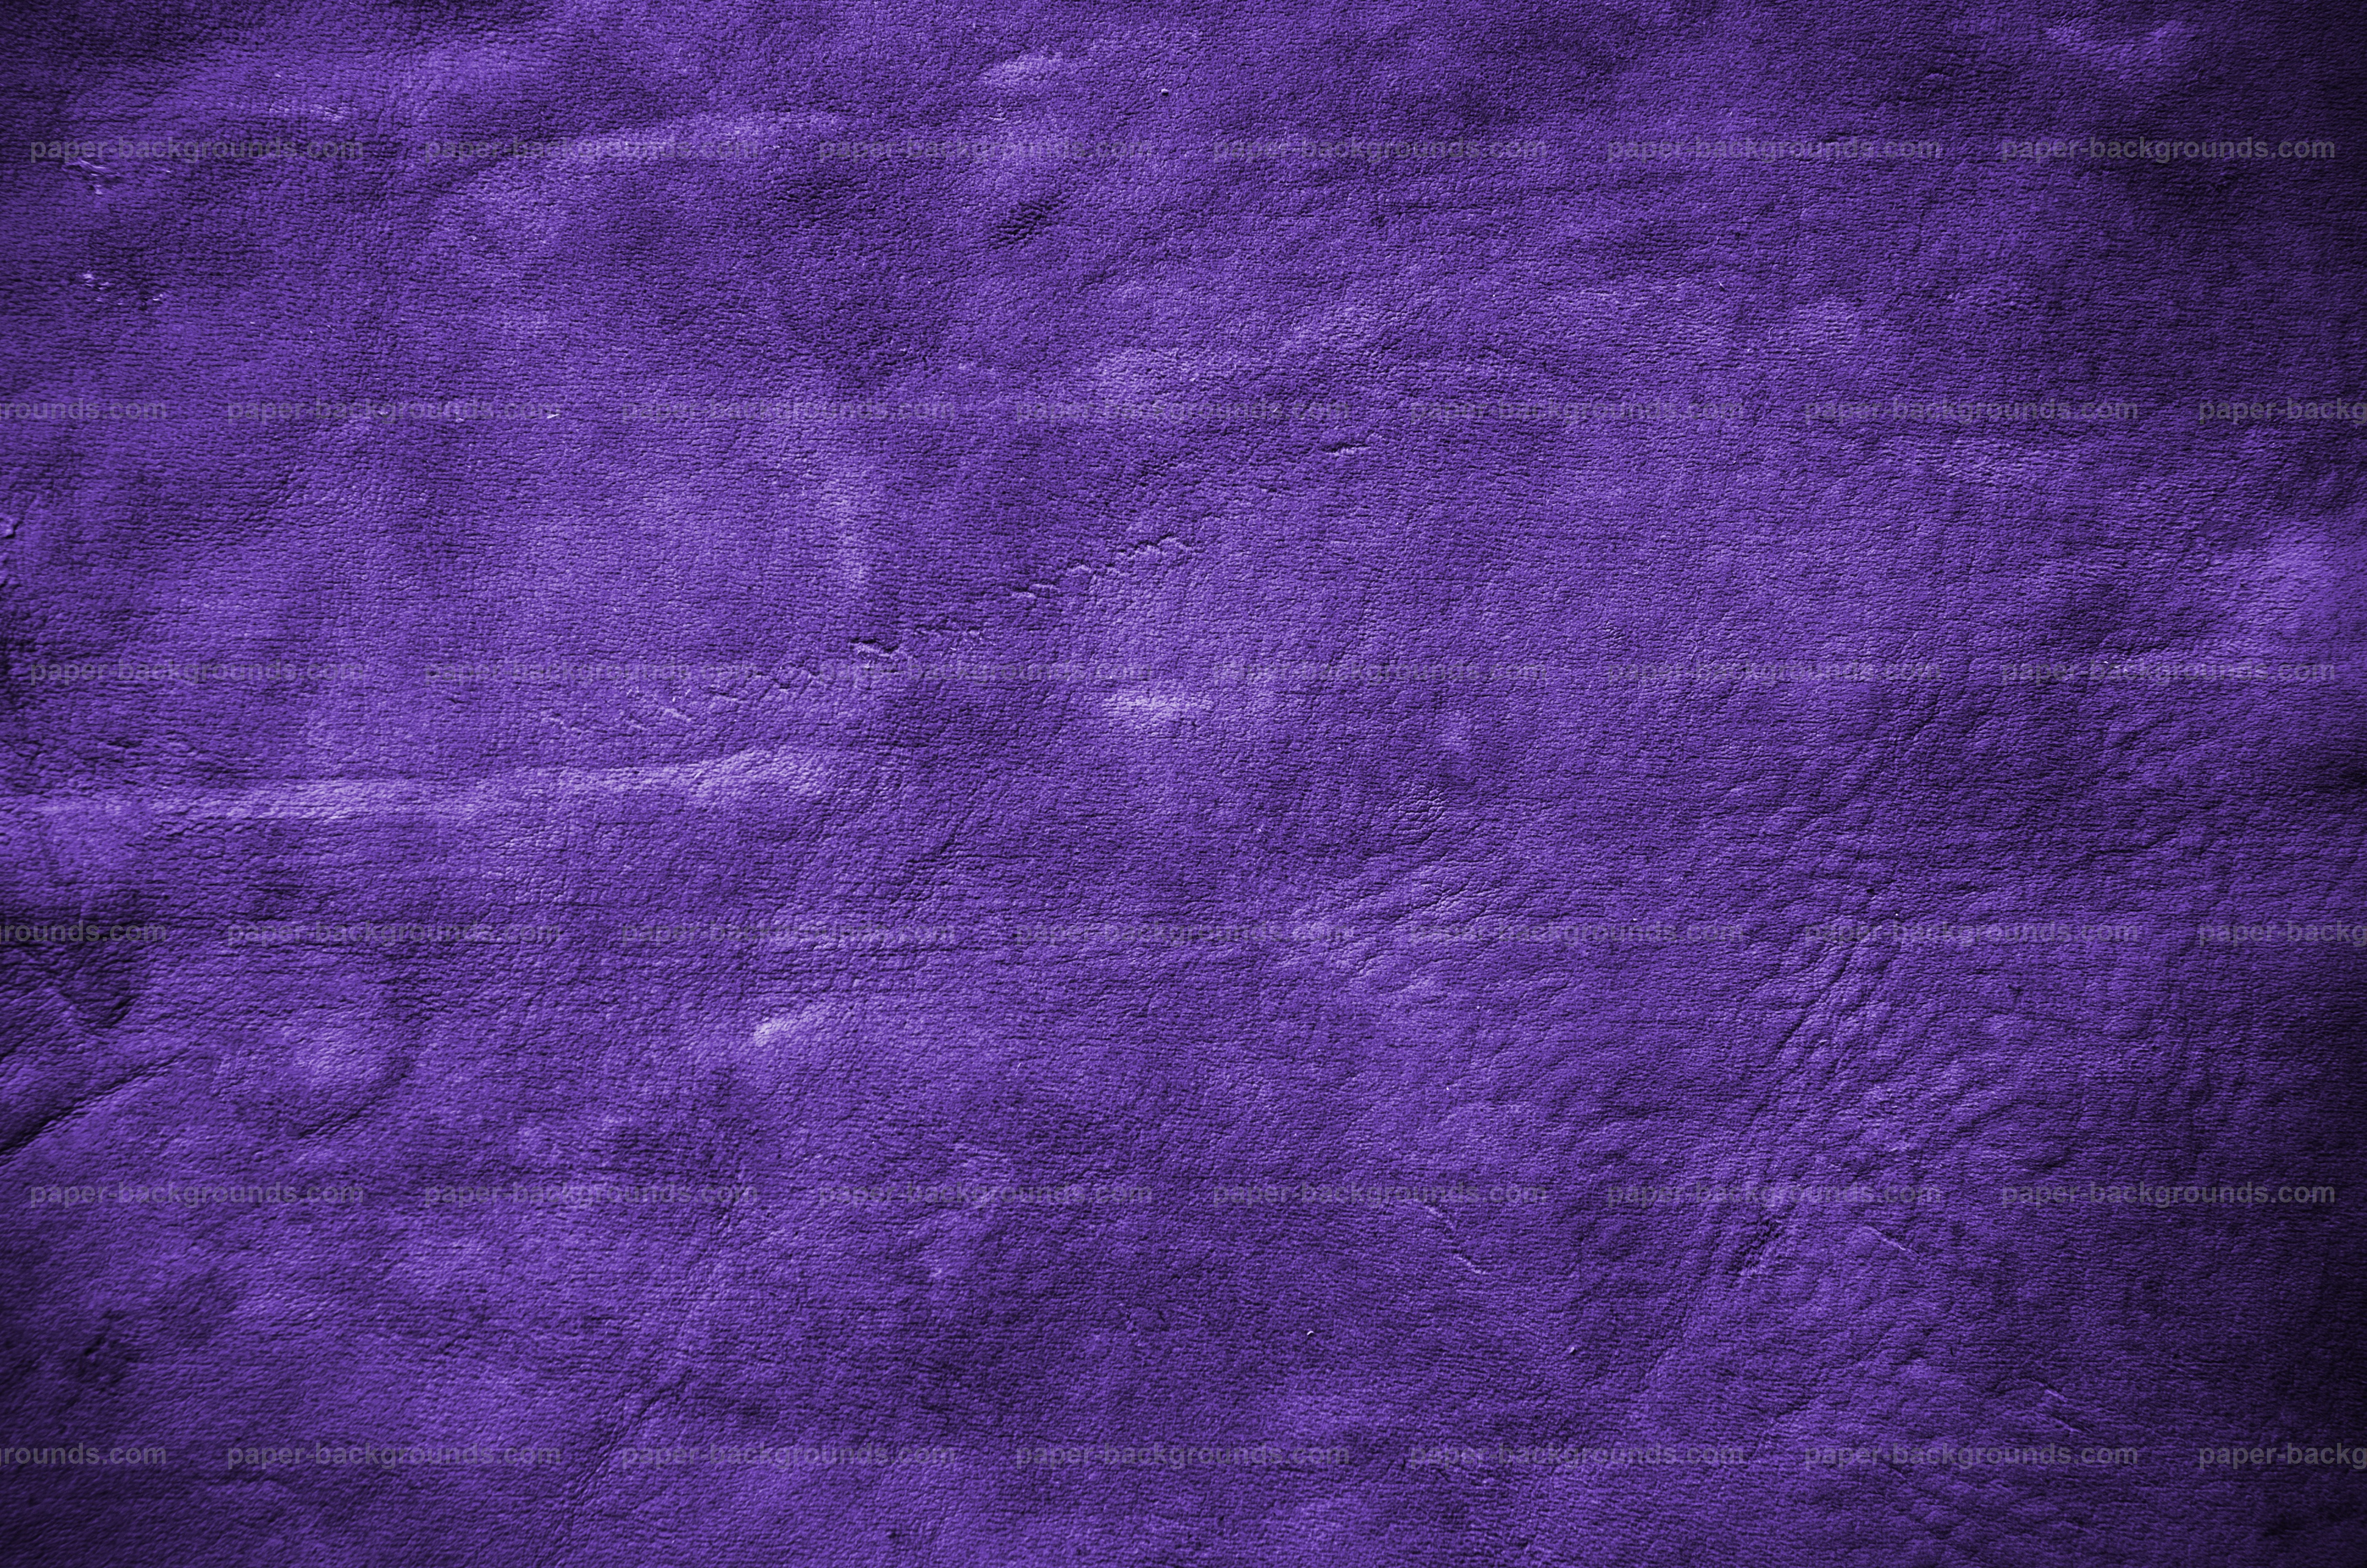 Paper Backgrounds Vintage Purple Soft Leather Texture Background